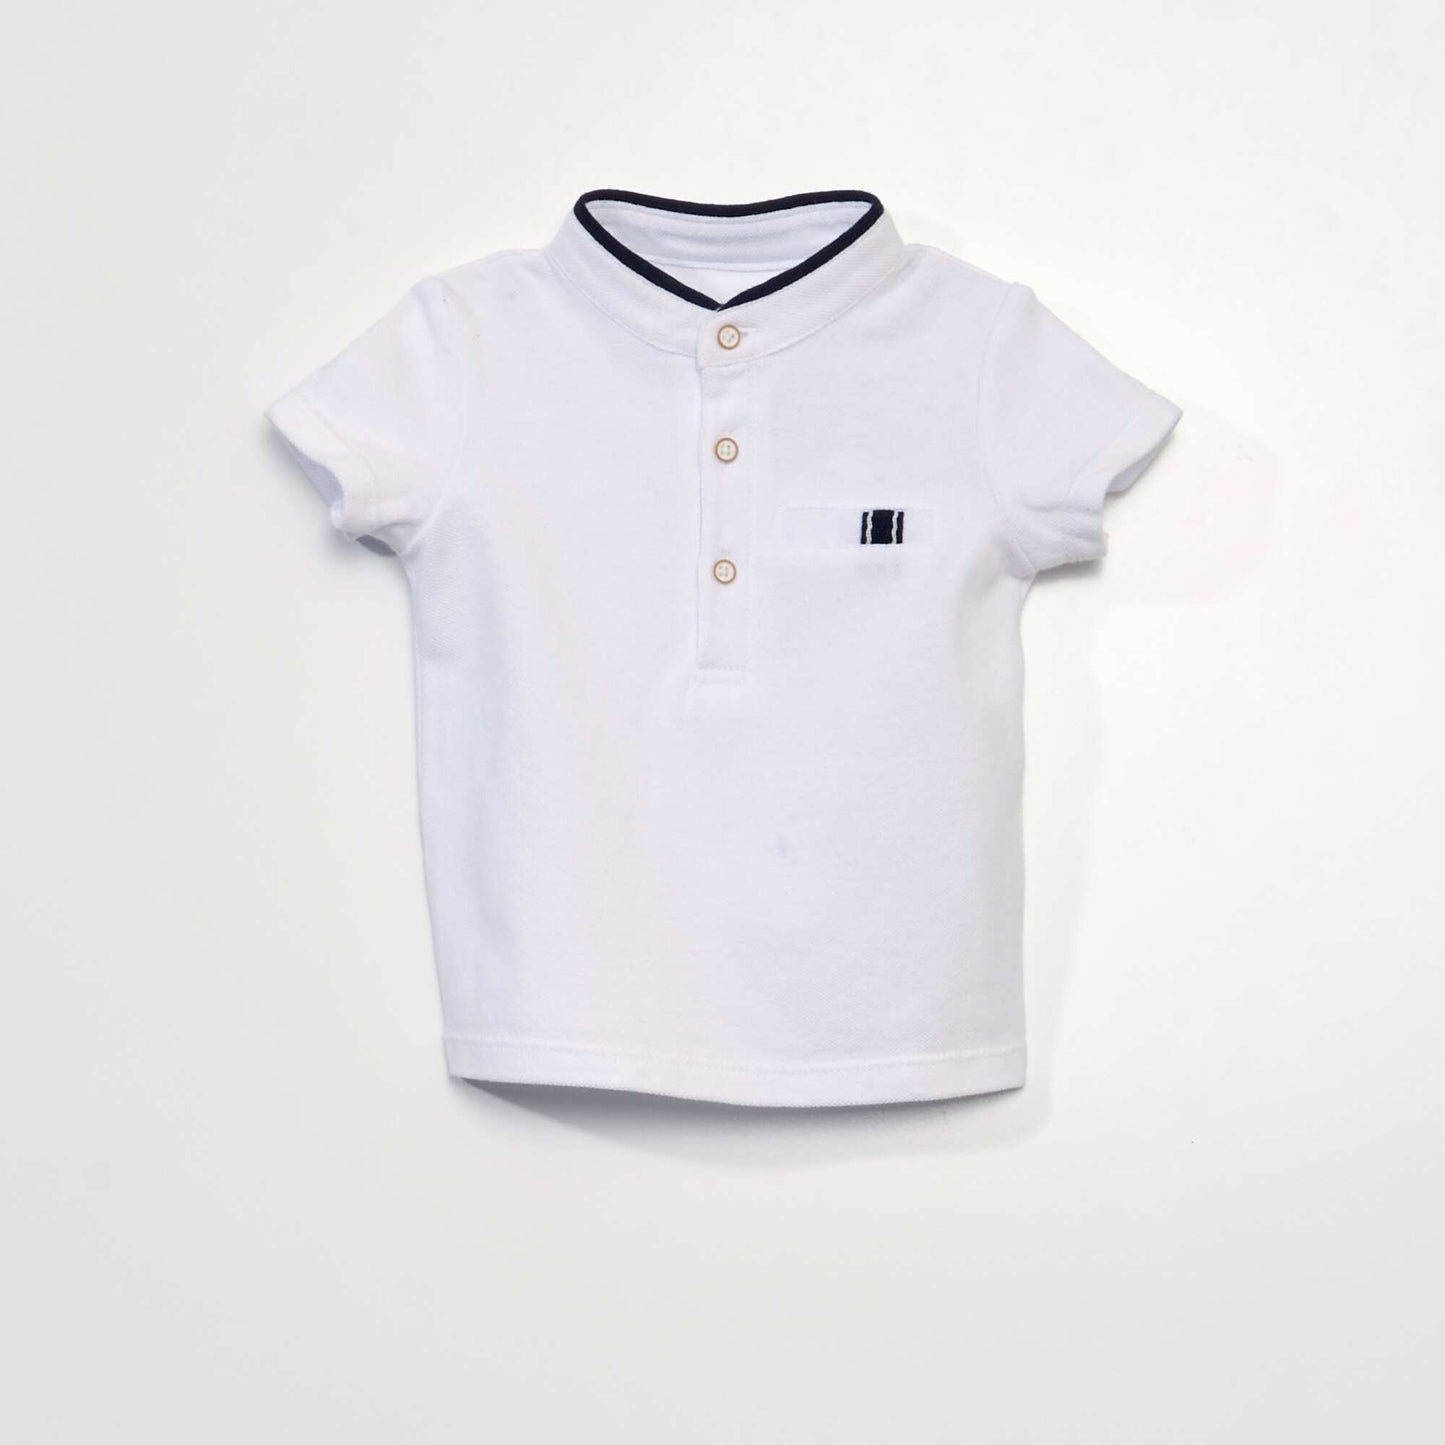 Two-piece set - Polo-style T-shirt + twill shorts WHITE